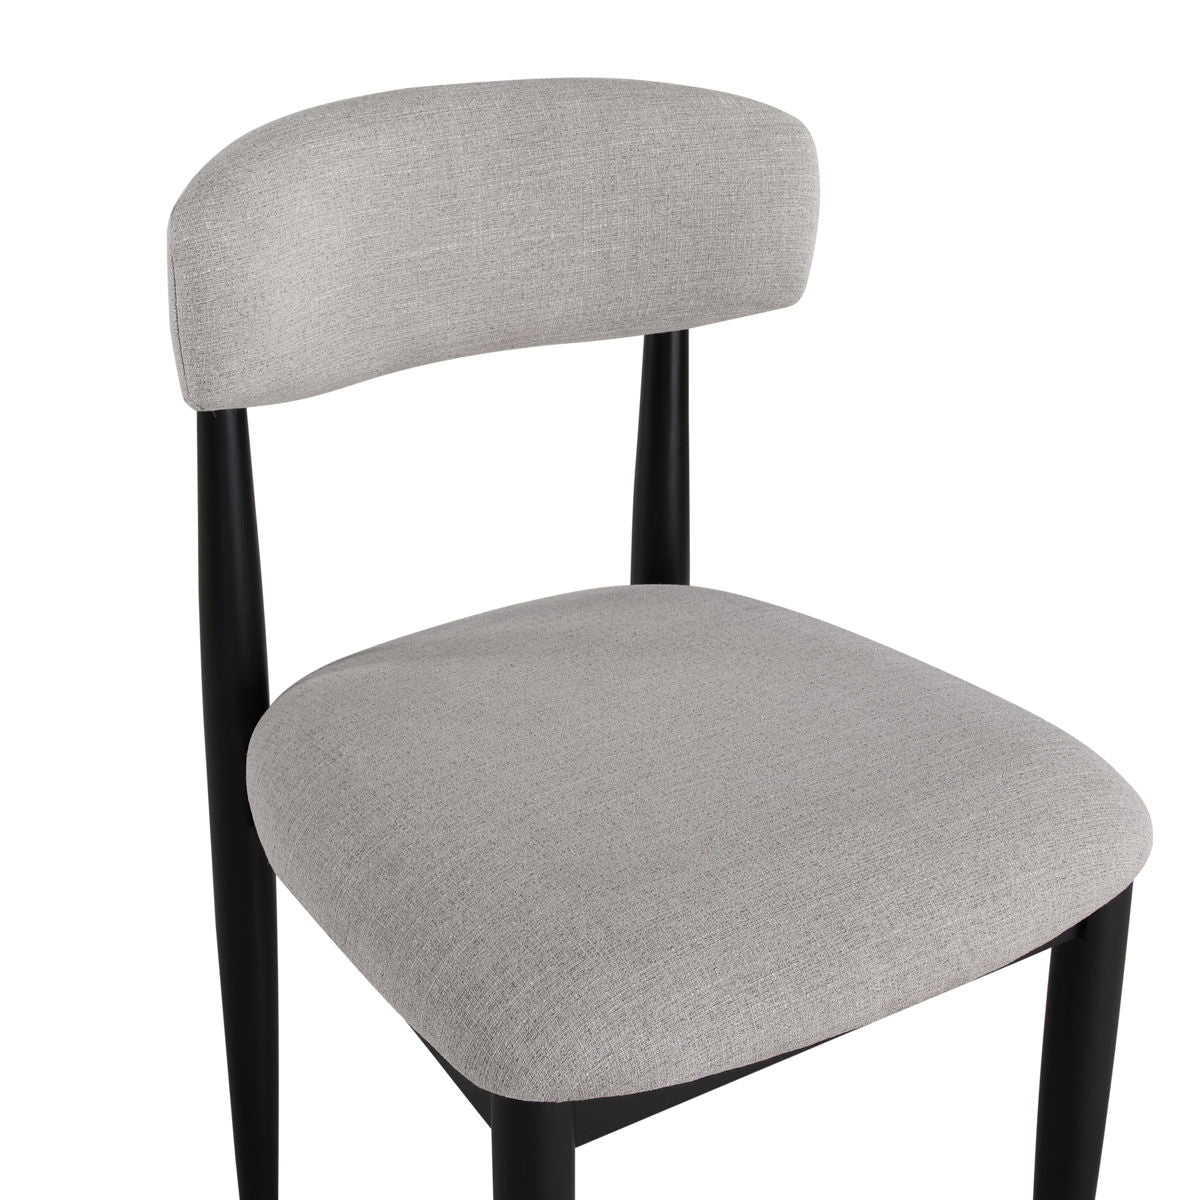 Magnolia - Upholstered Side Chair (Set of 2) - Black / Gray